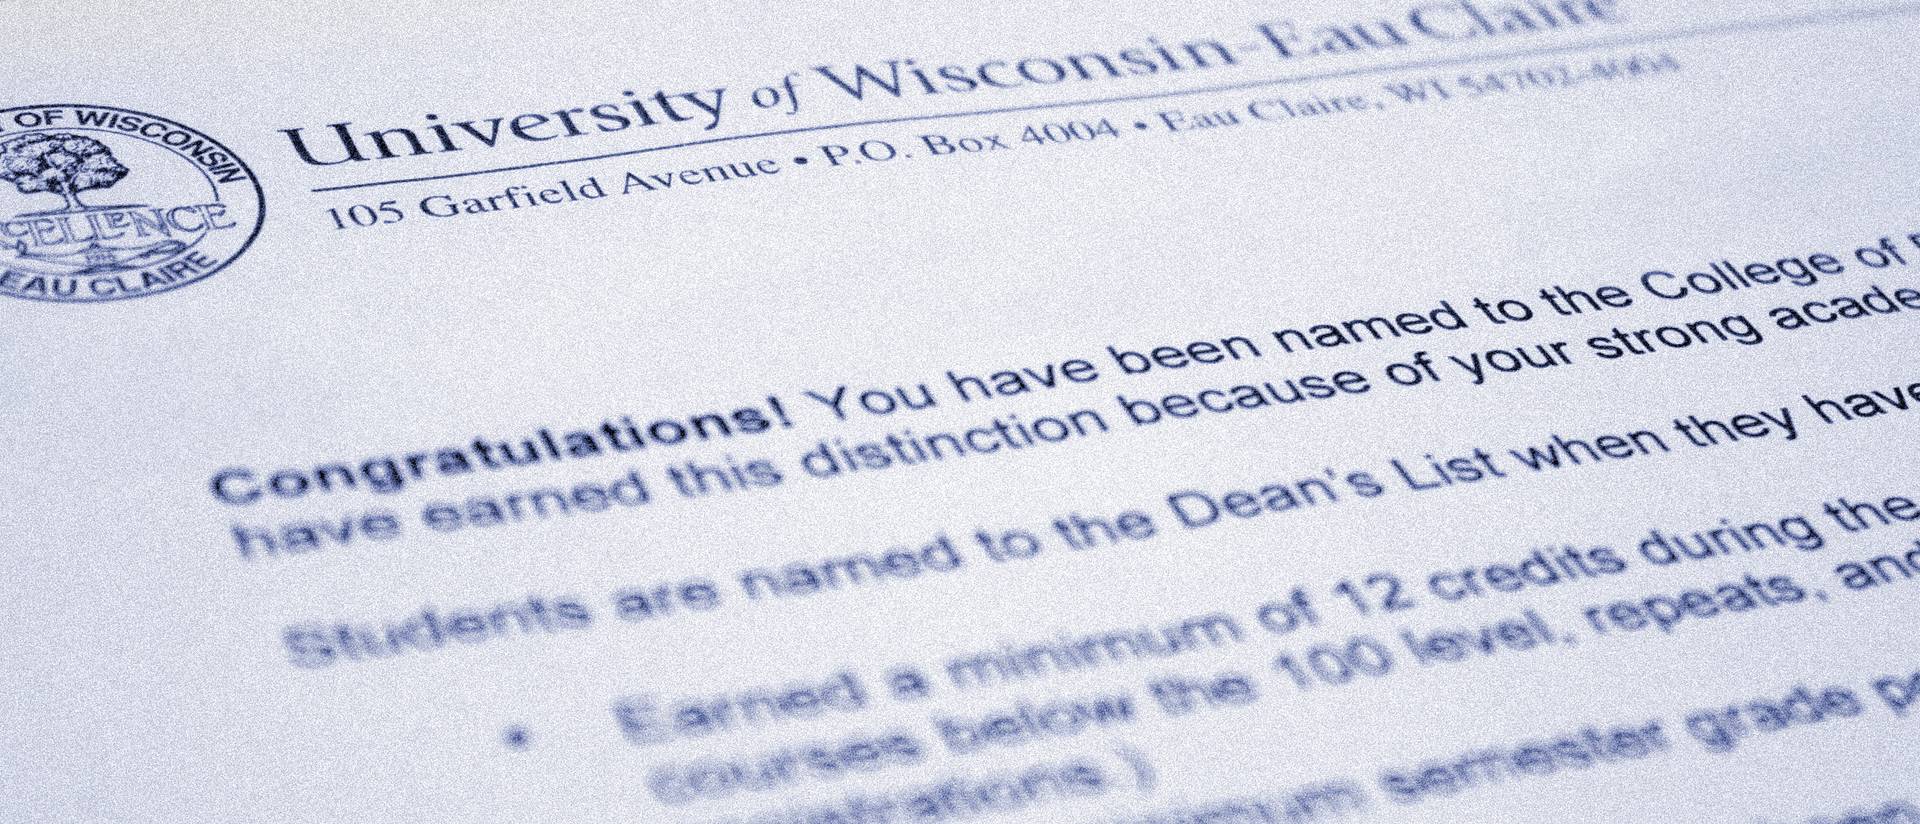 Photo of Dean's List congratulatory letter